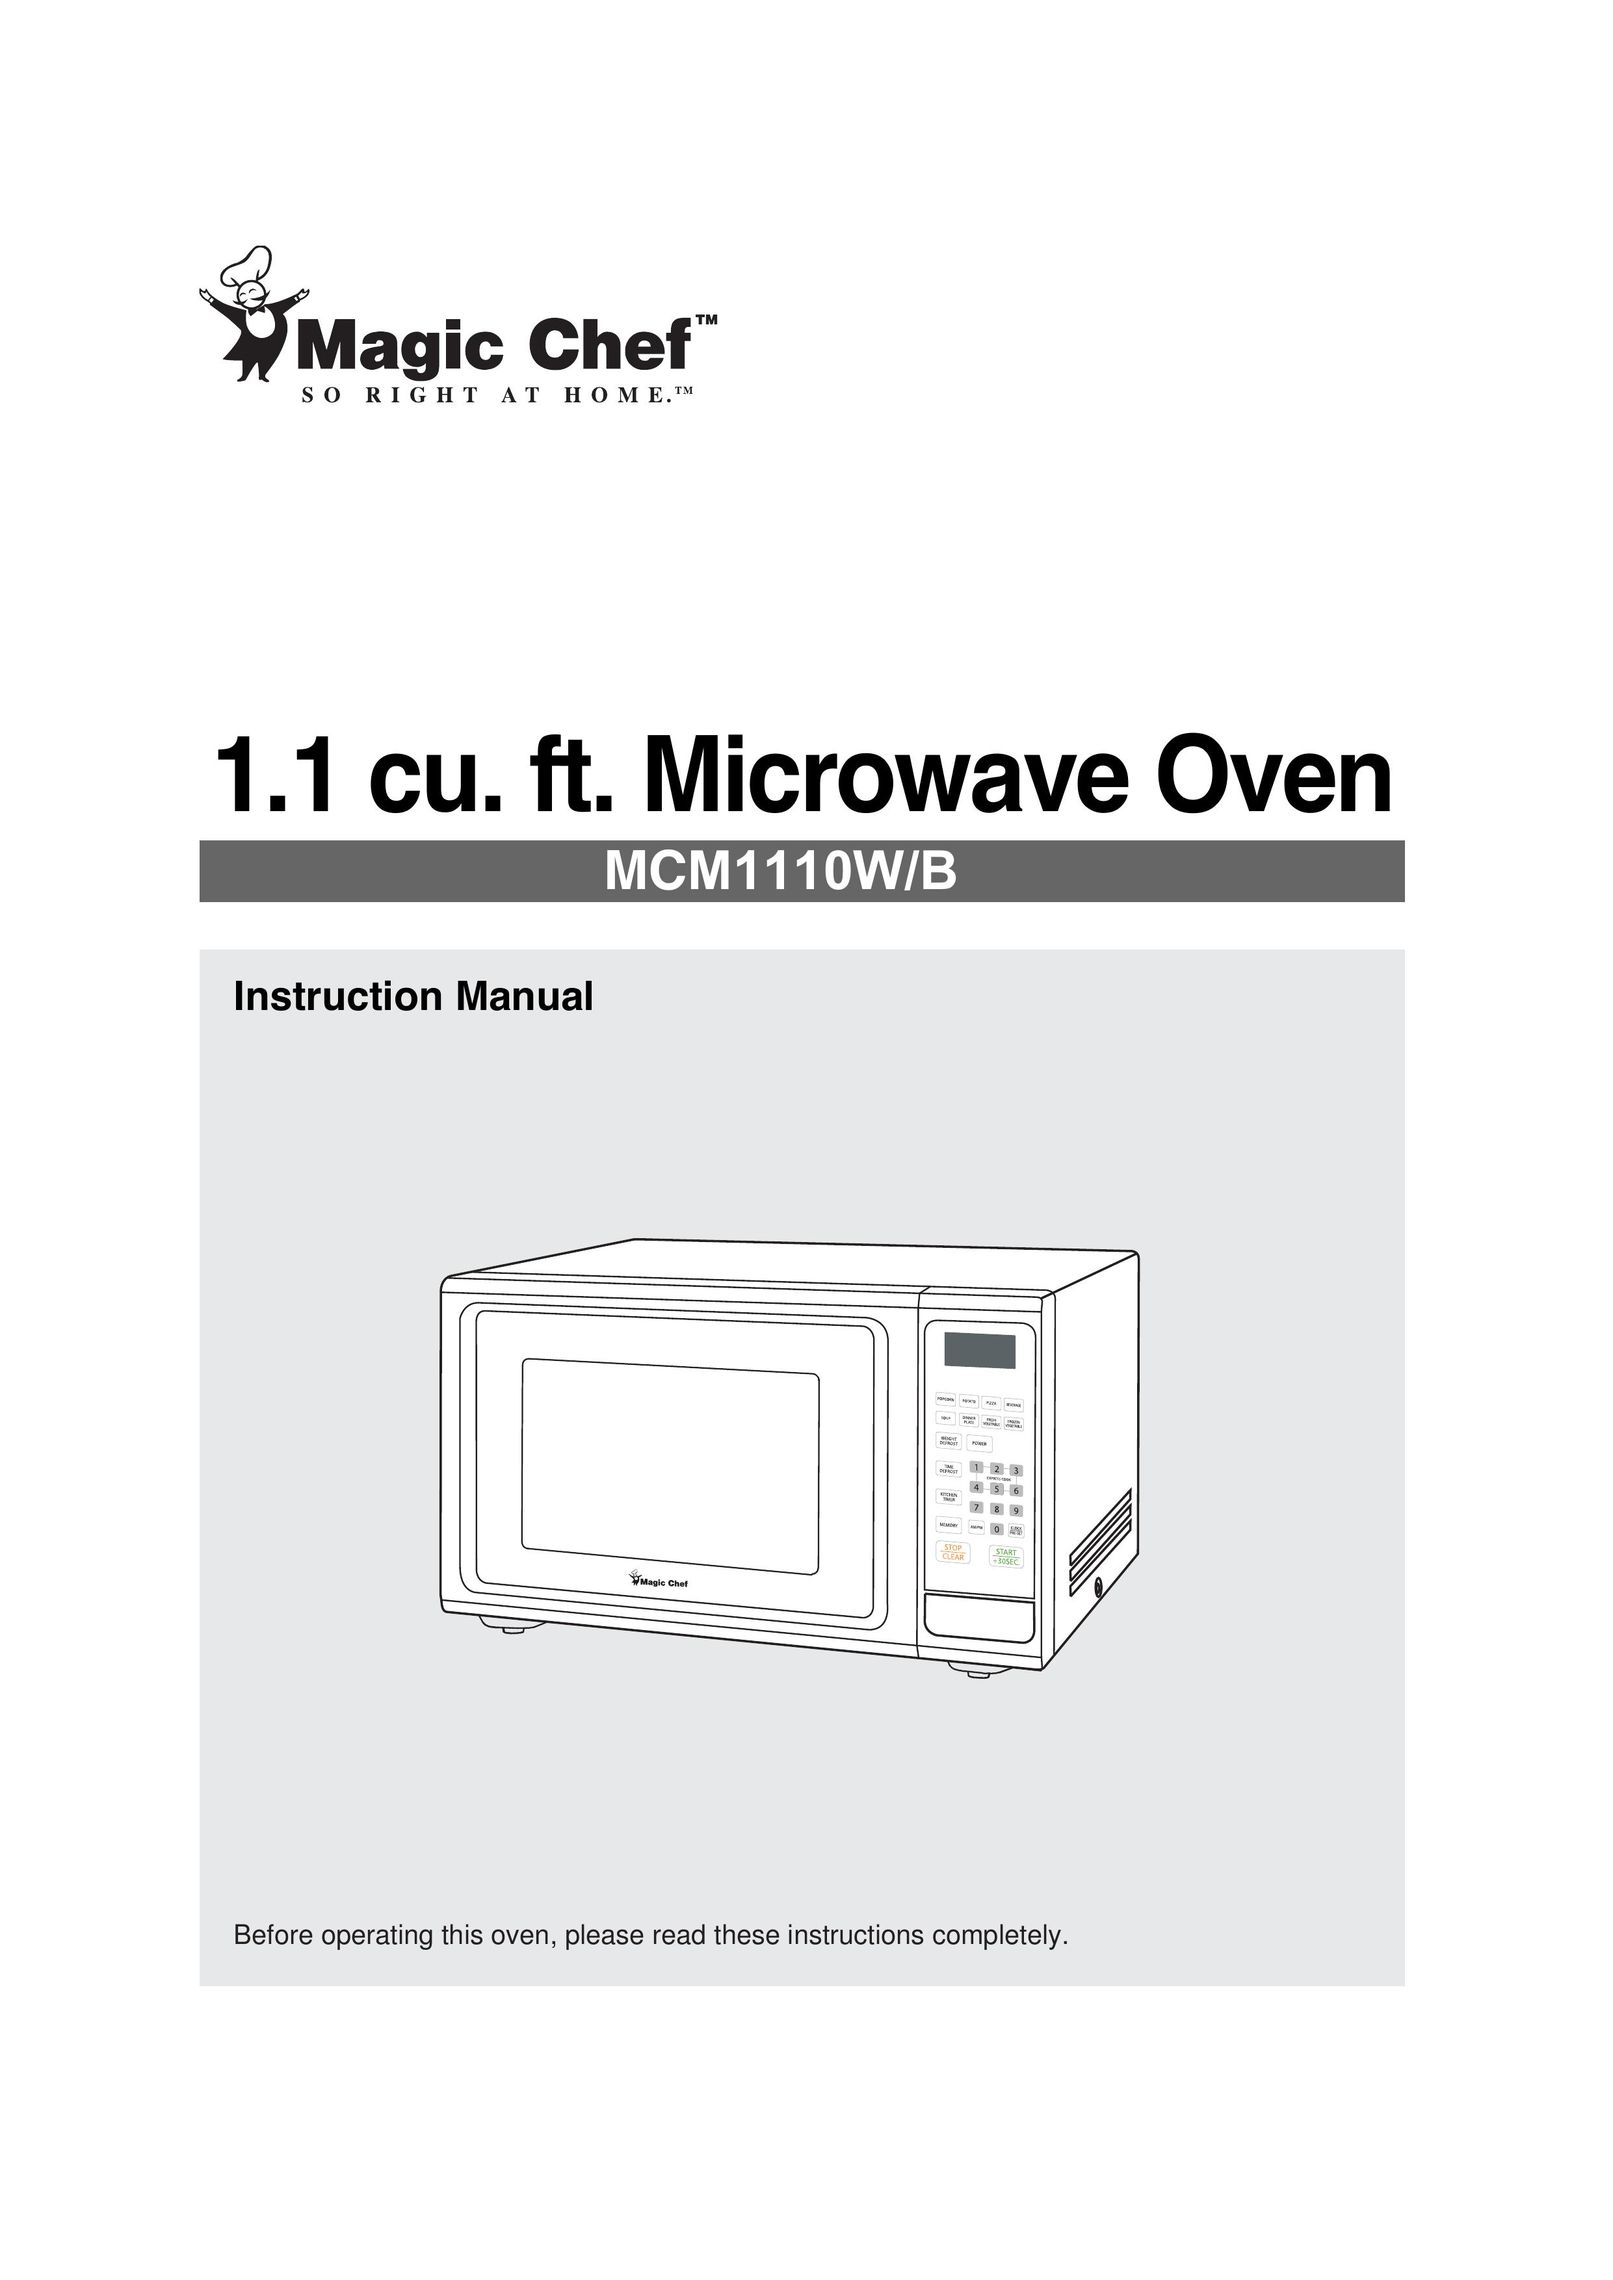 Magic Chef MCM1110W/B Microwave Oven User Manual